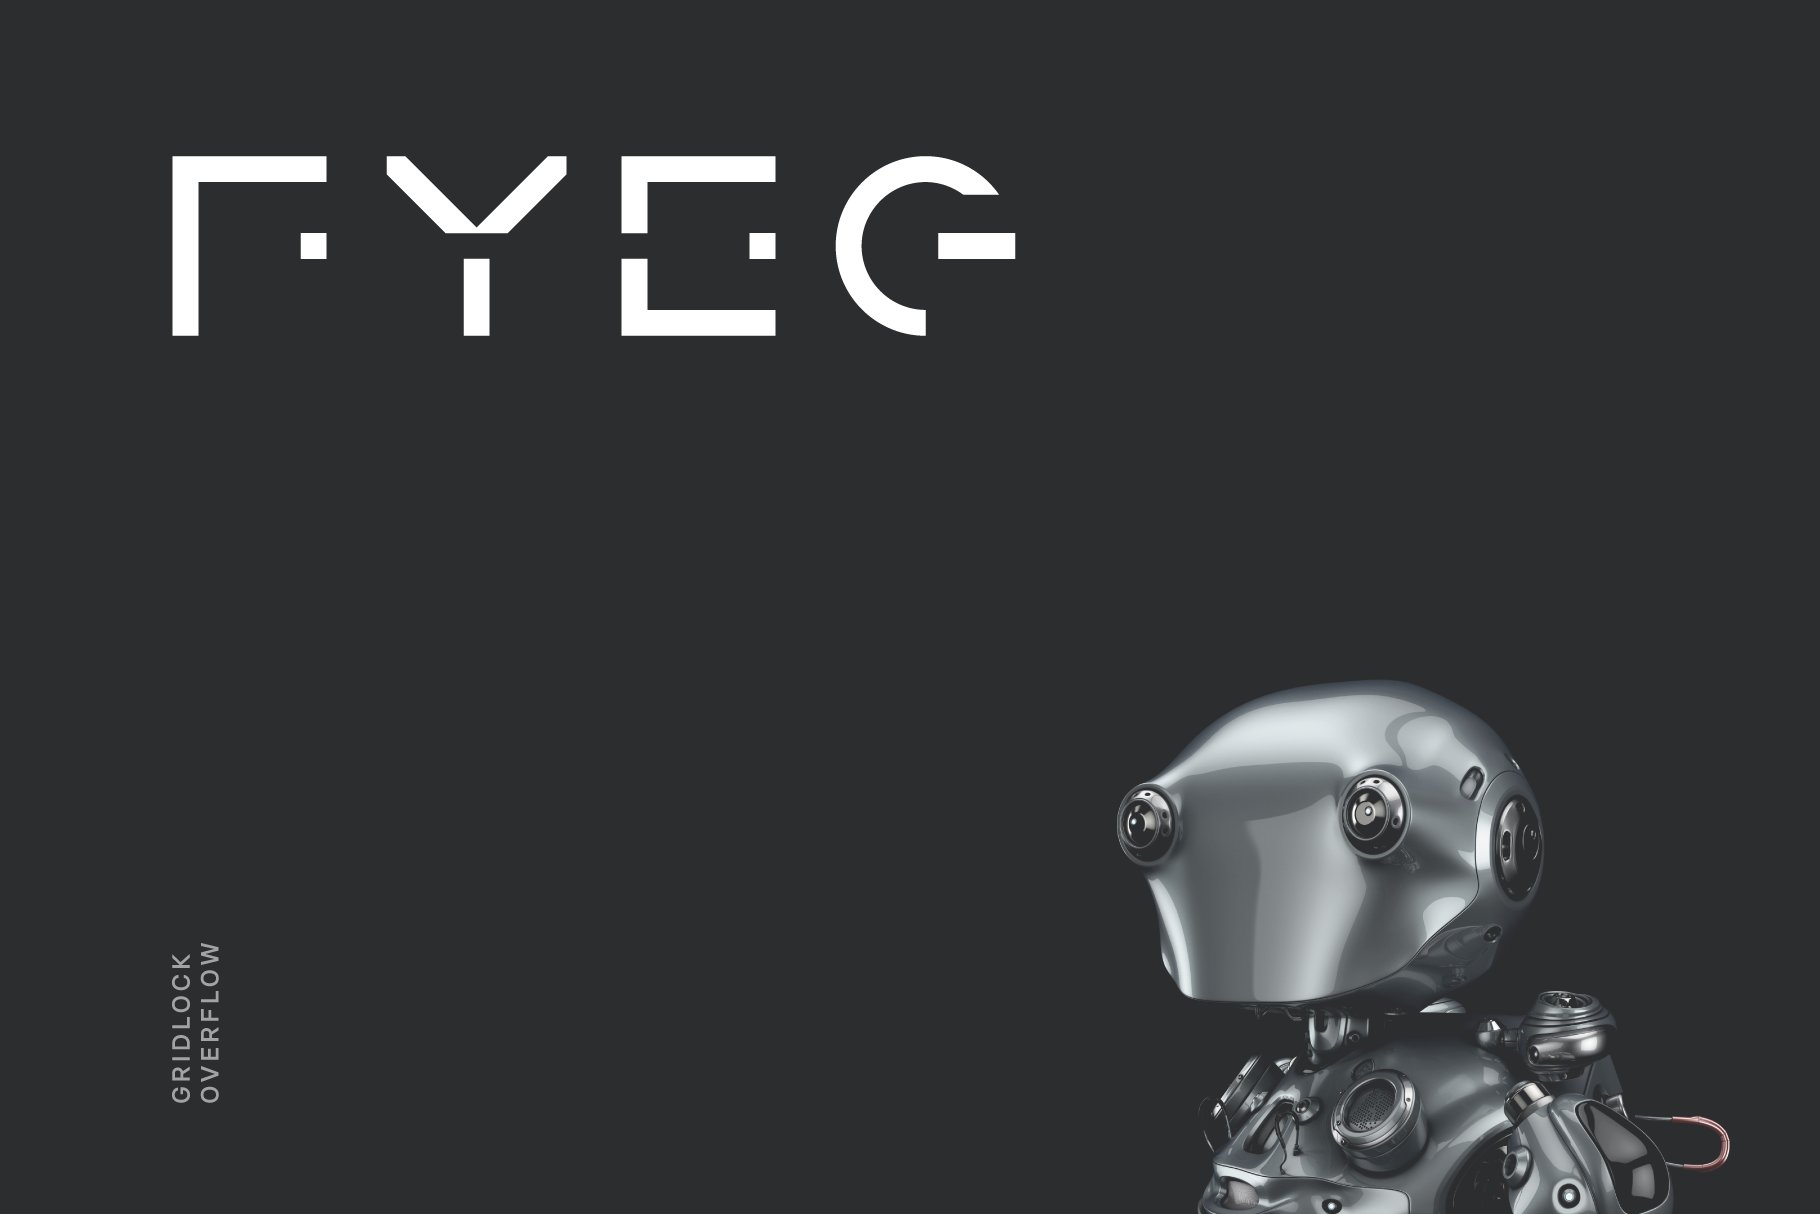 Fyeg Futuristic Tech Font cover image.